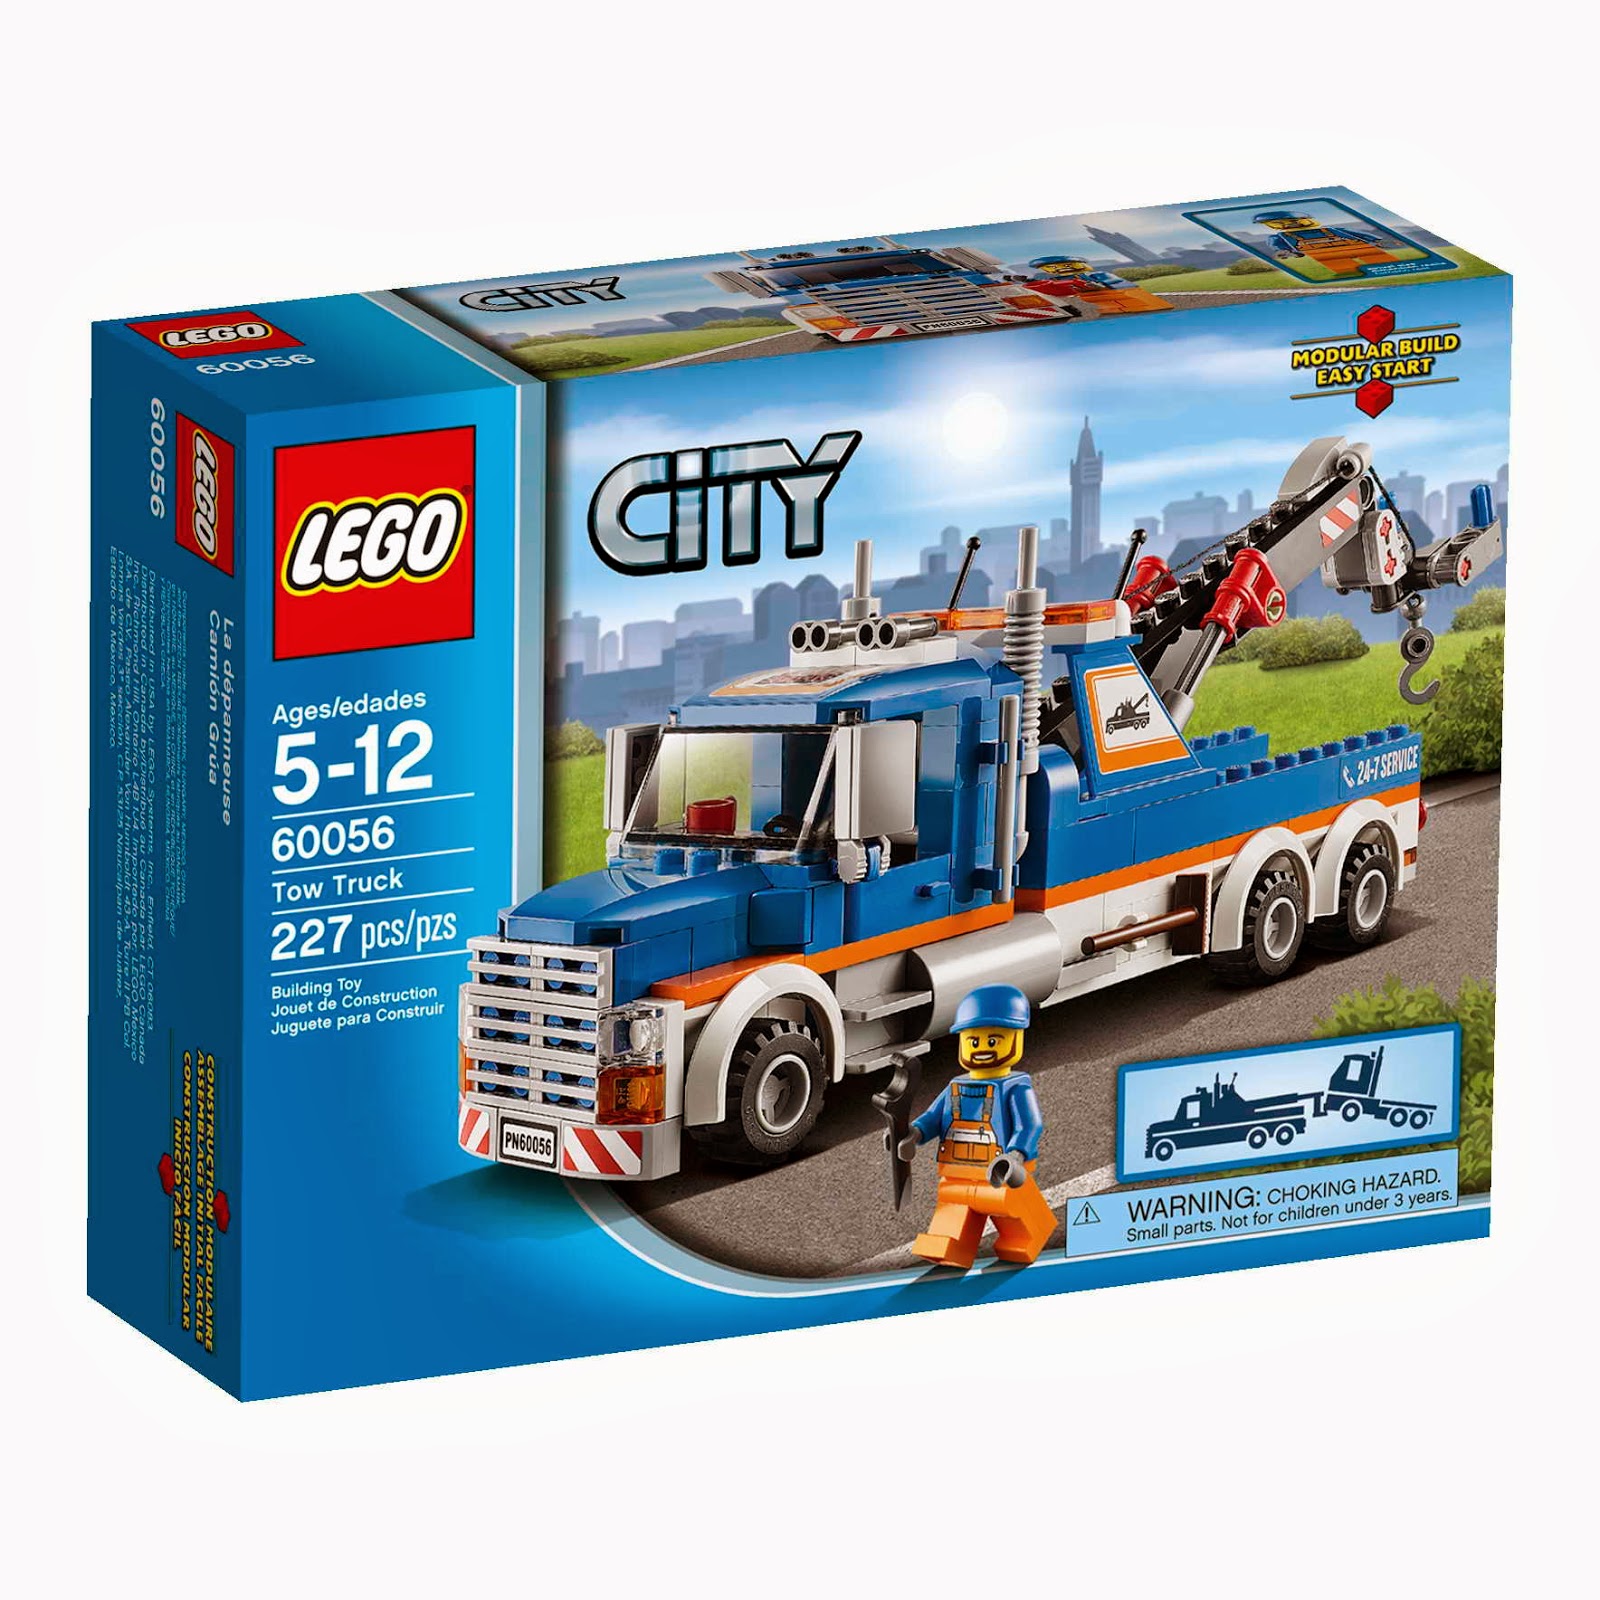 LEGO gosSIP: 111113 LEGO 60056 Tow Truck box art